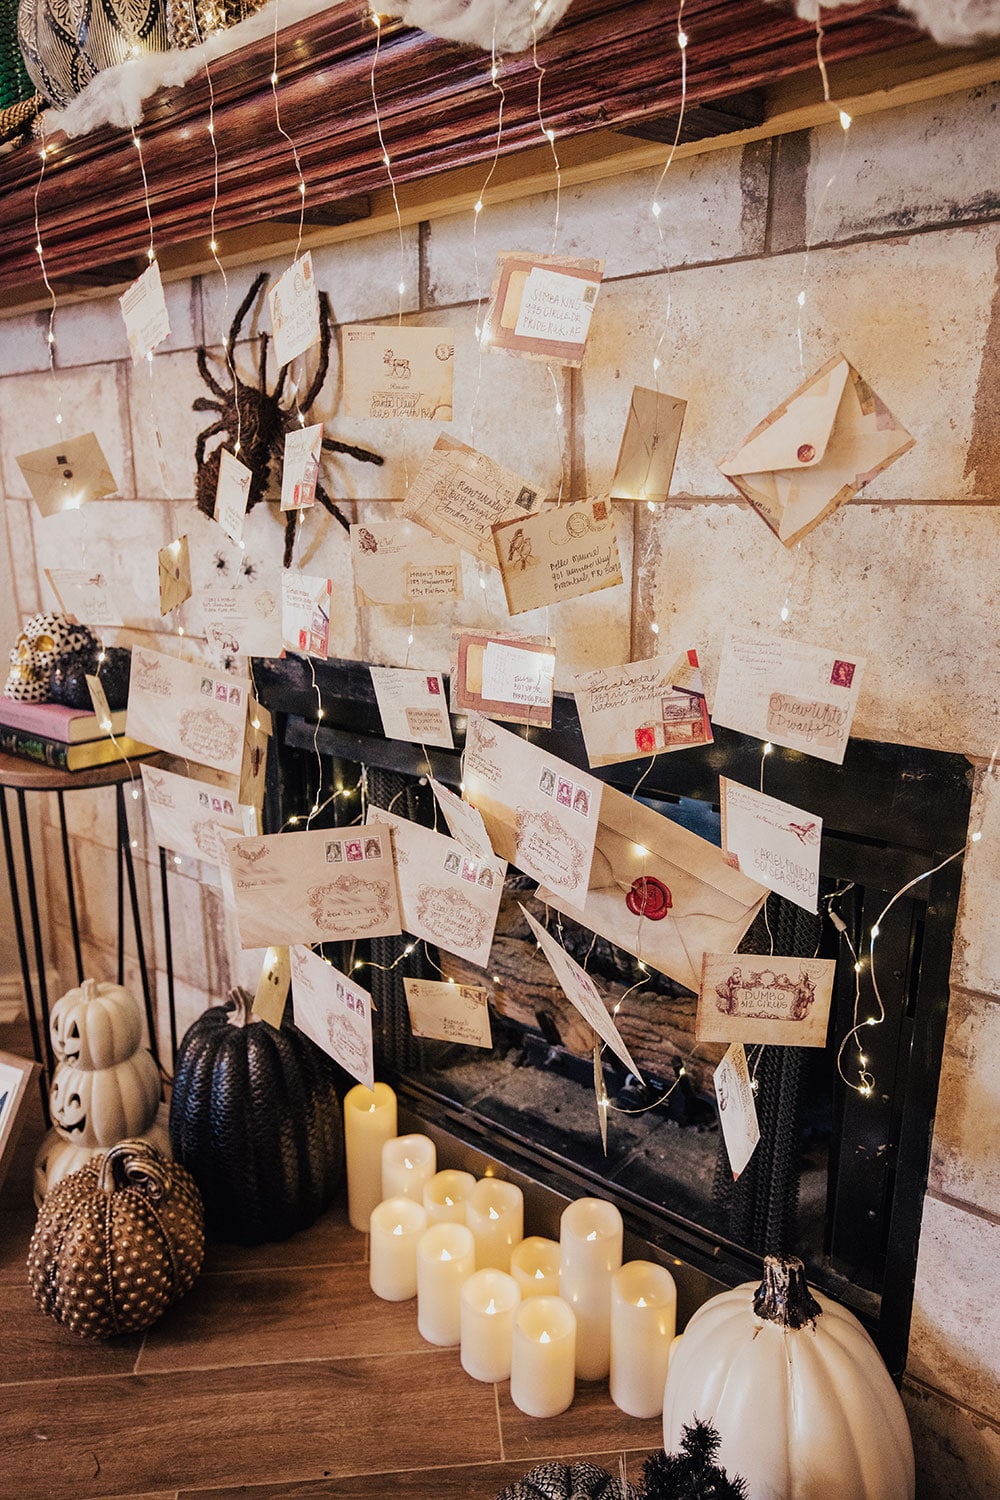 Our Harry Potter Halloween Decorations - Mantle Decor DIY